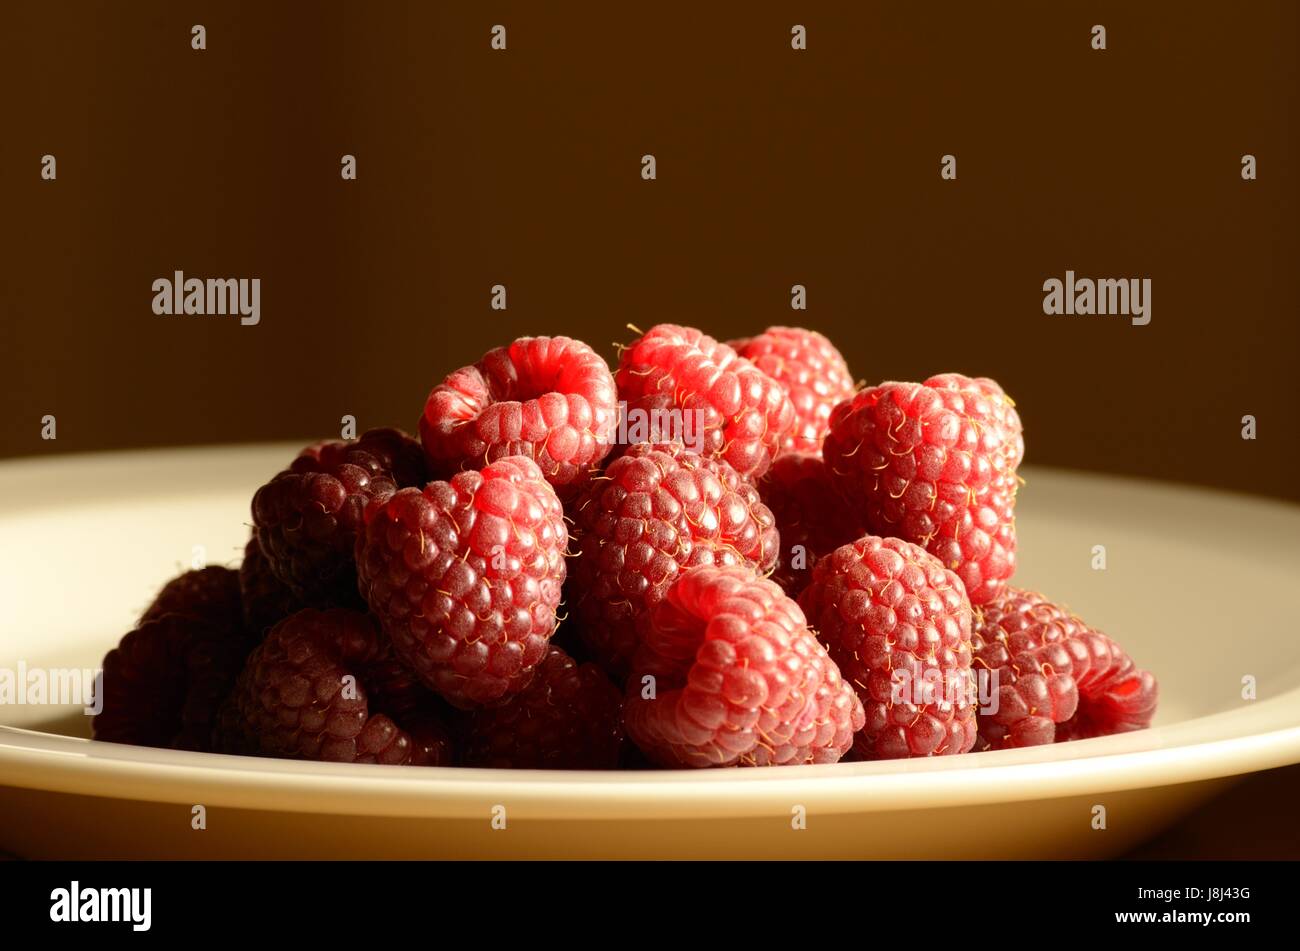 A Dish of Raspberries Stock Photo